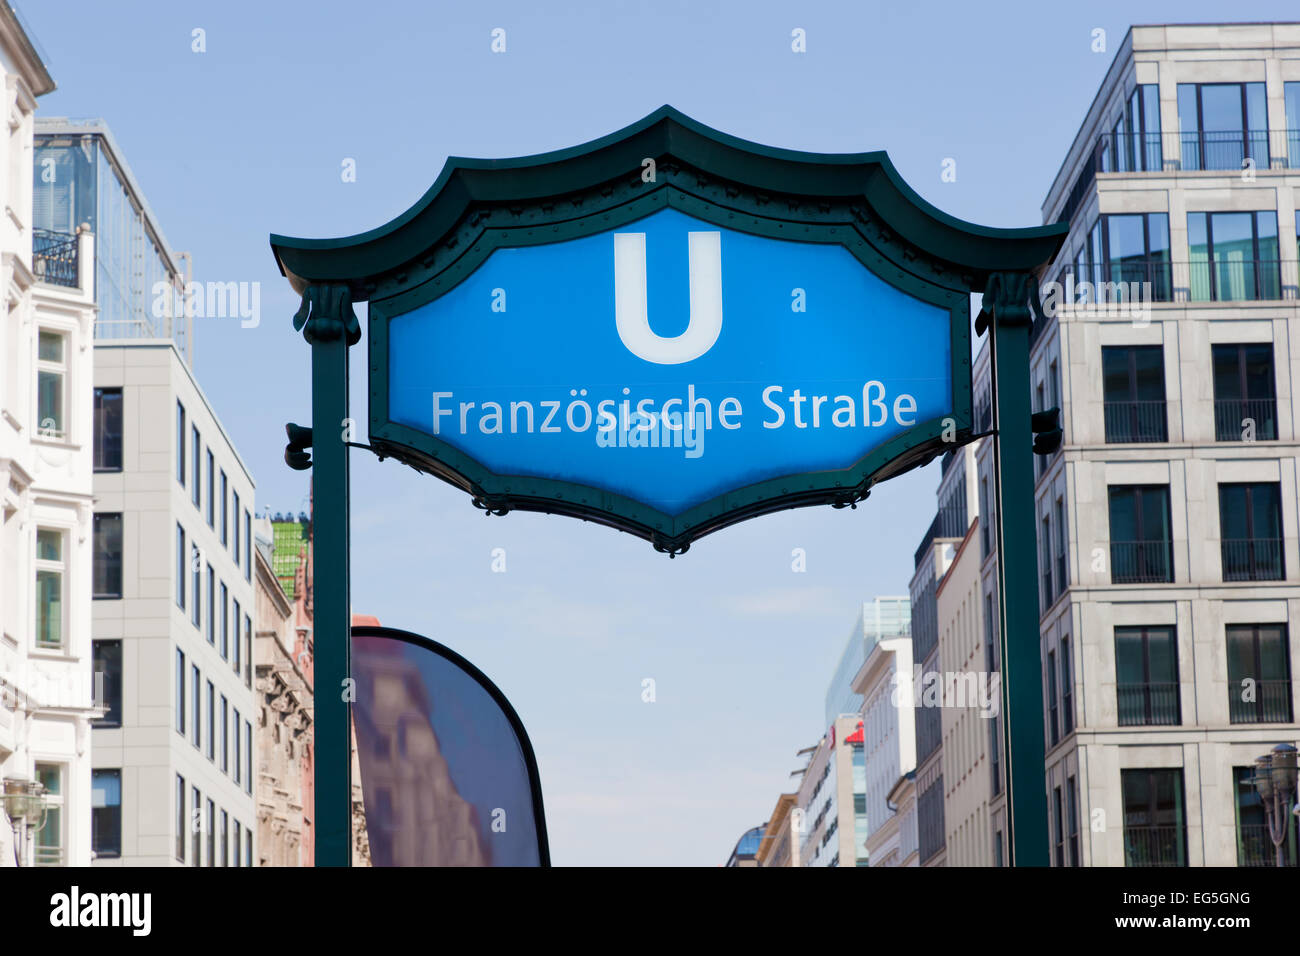 U-bahn franzosische strasse entrance. Berlin Mitte, Germany Stock Photo